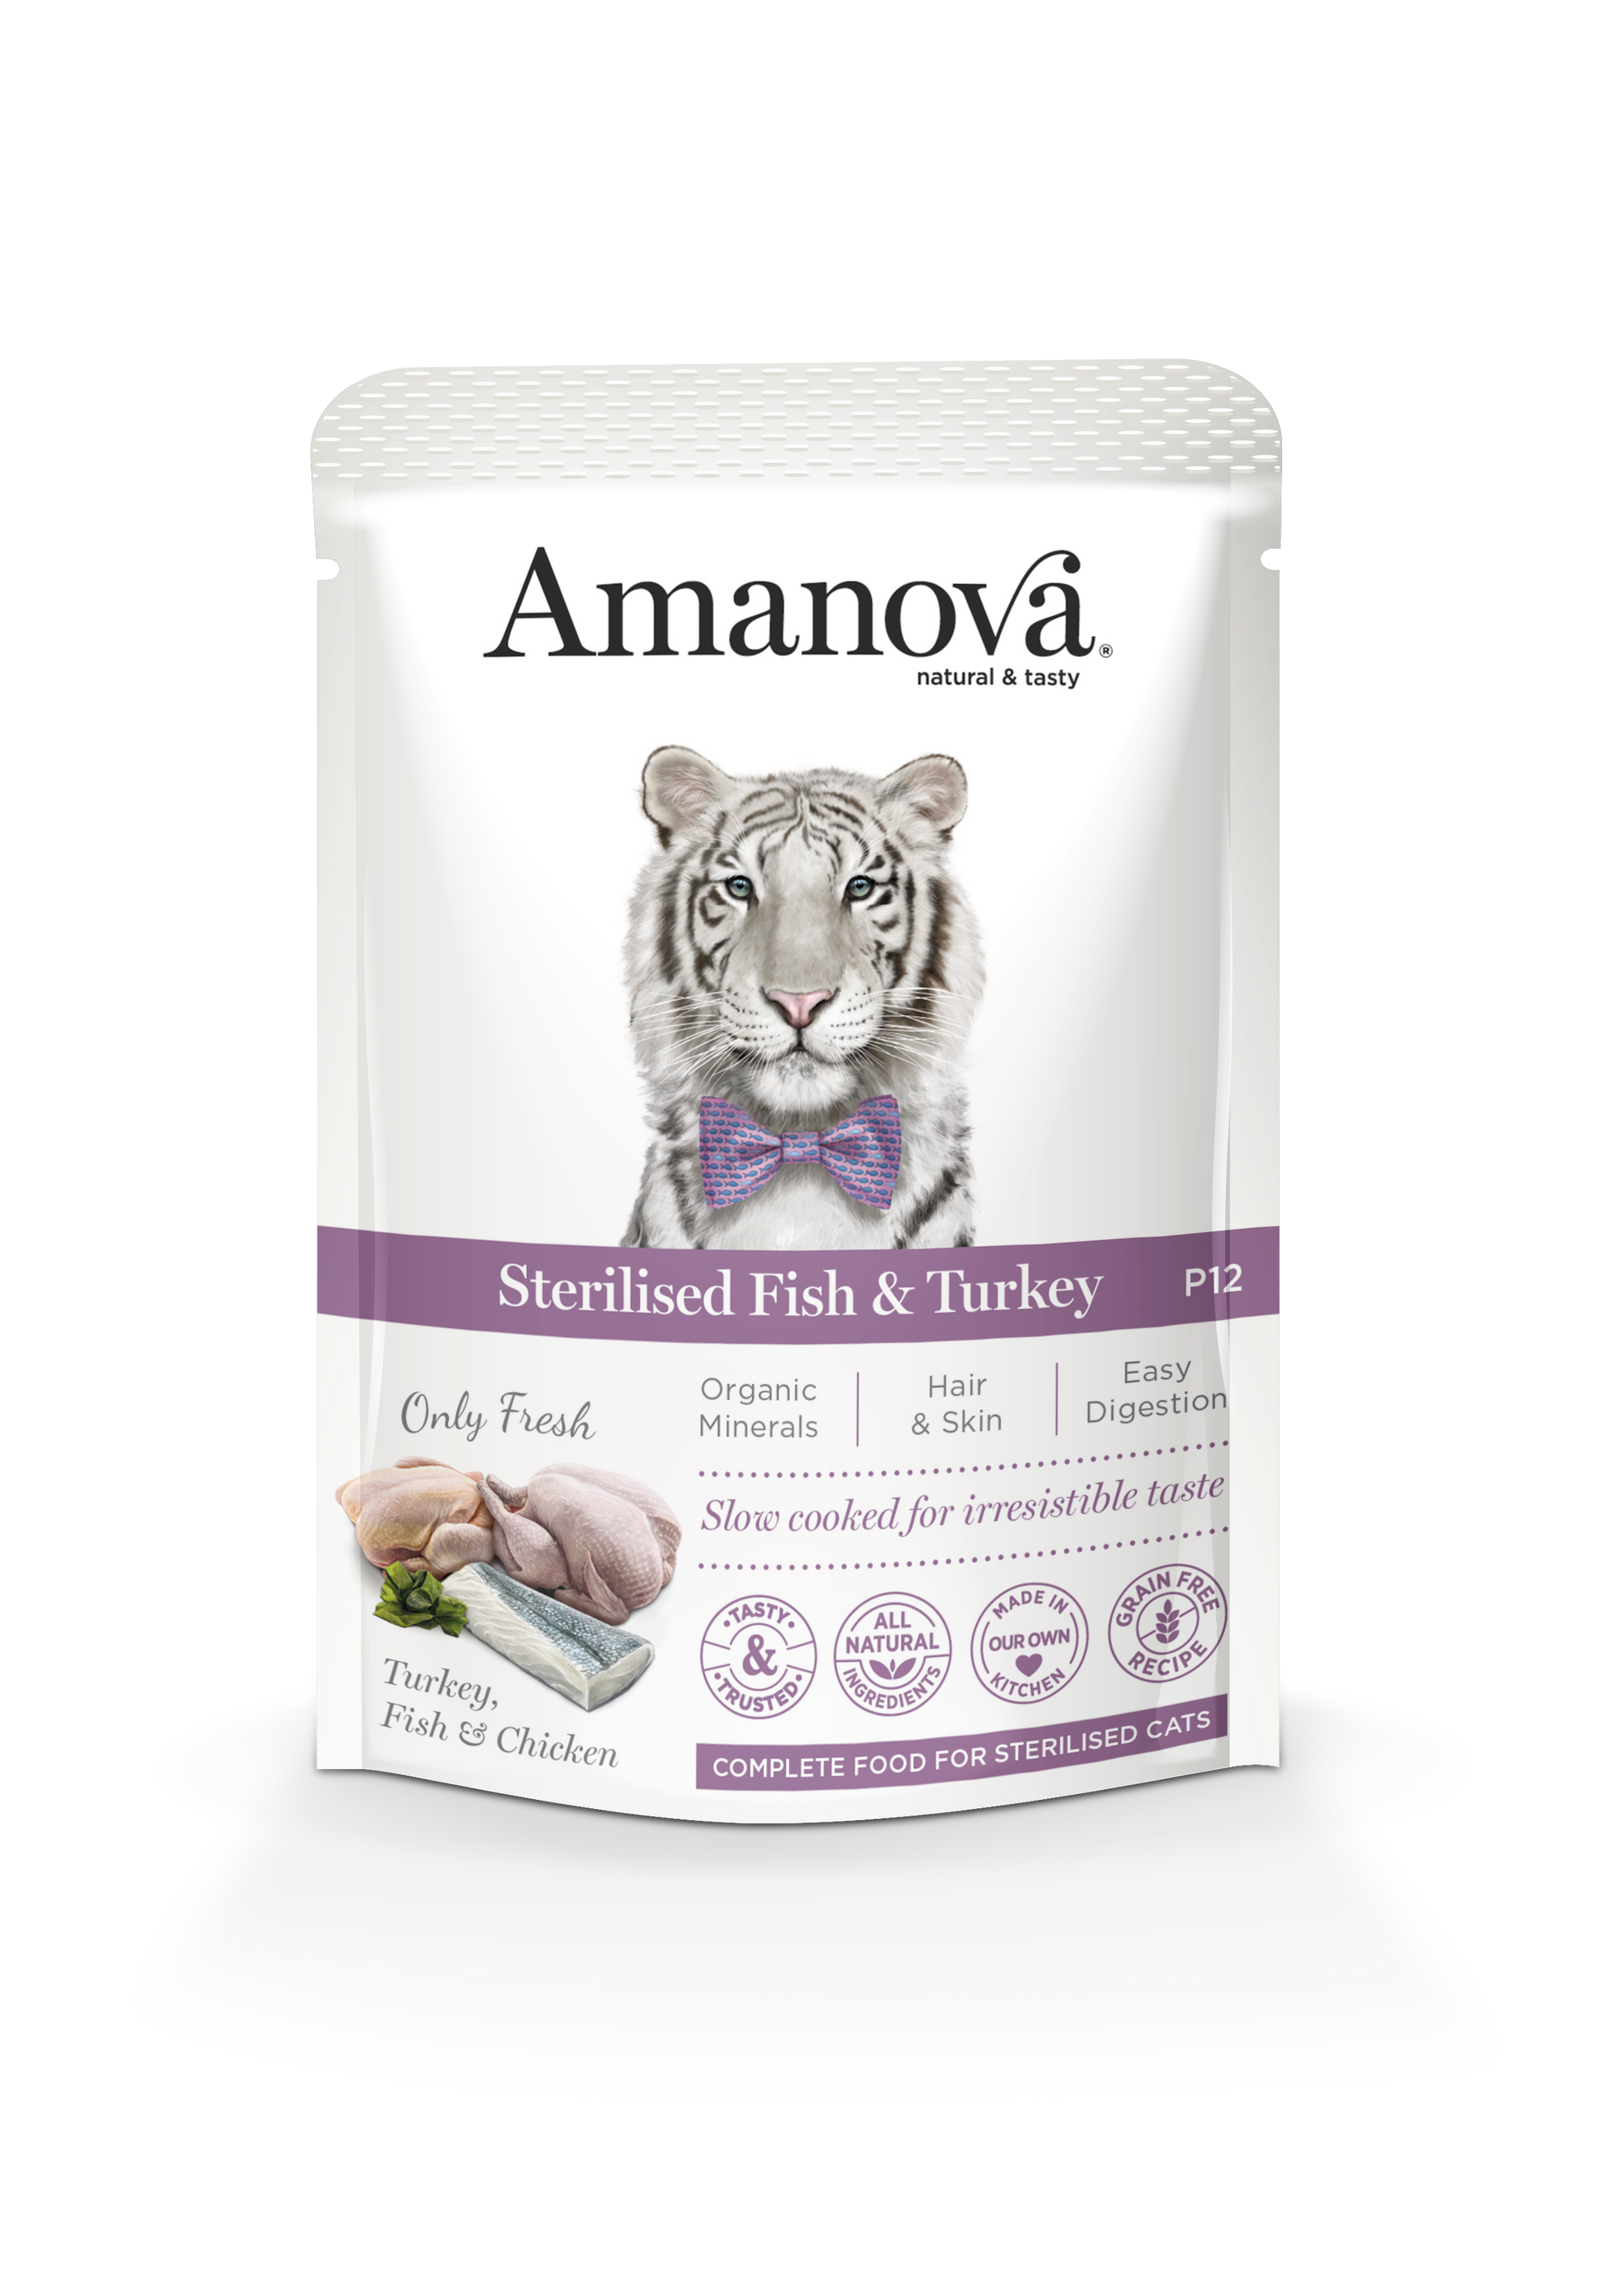 Amanova Grain Free Cat Sterilised Fish & Turkey 85g P12